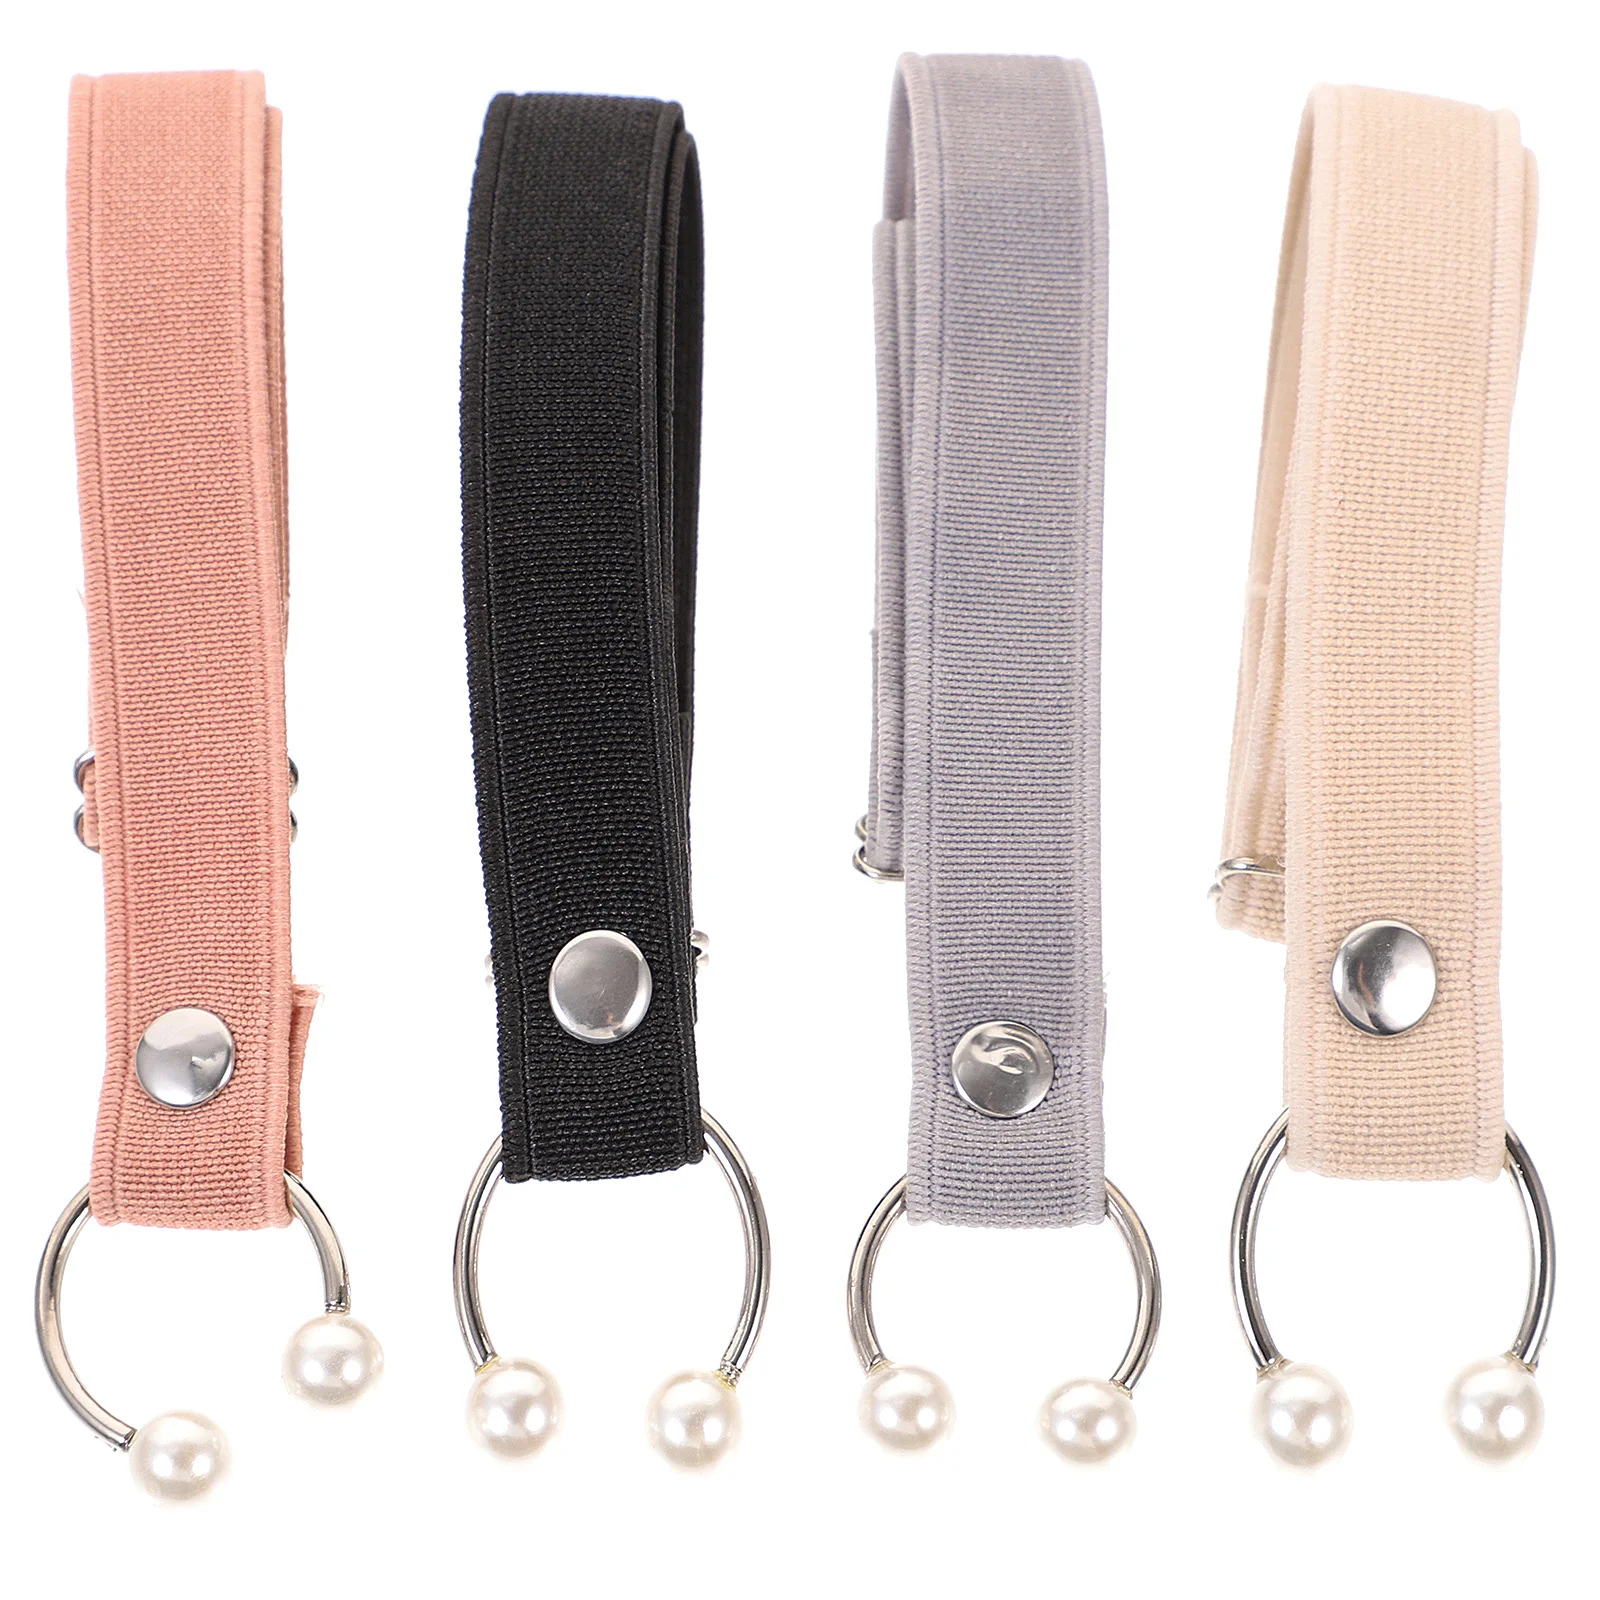 

8Pcs Women's High Heeled Detachable Elastic Shoelaces Straps (Black, Grey, Beige, Pink)